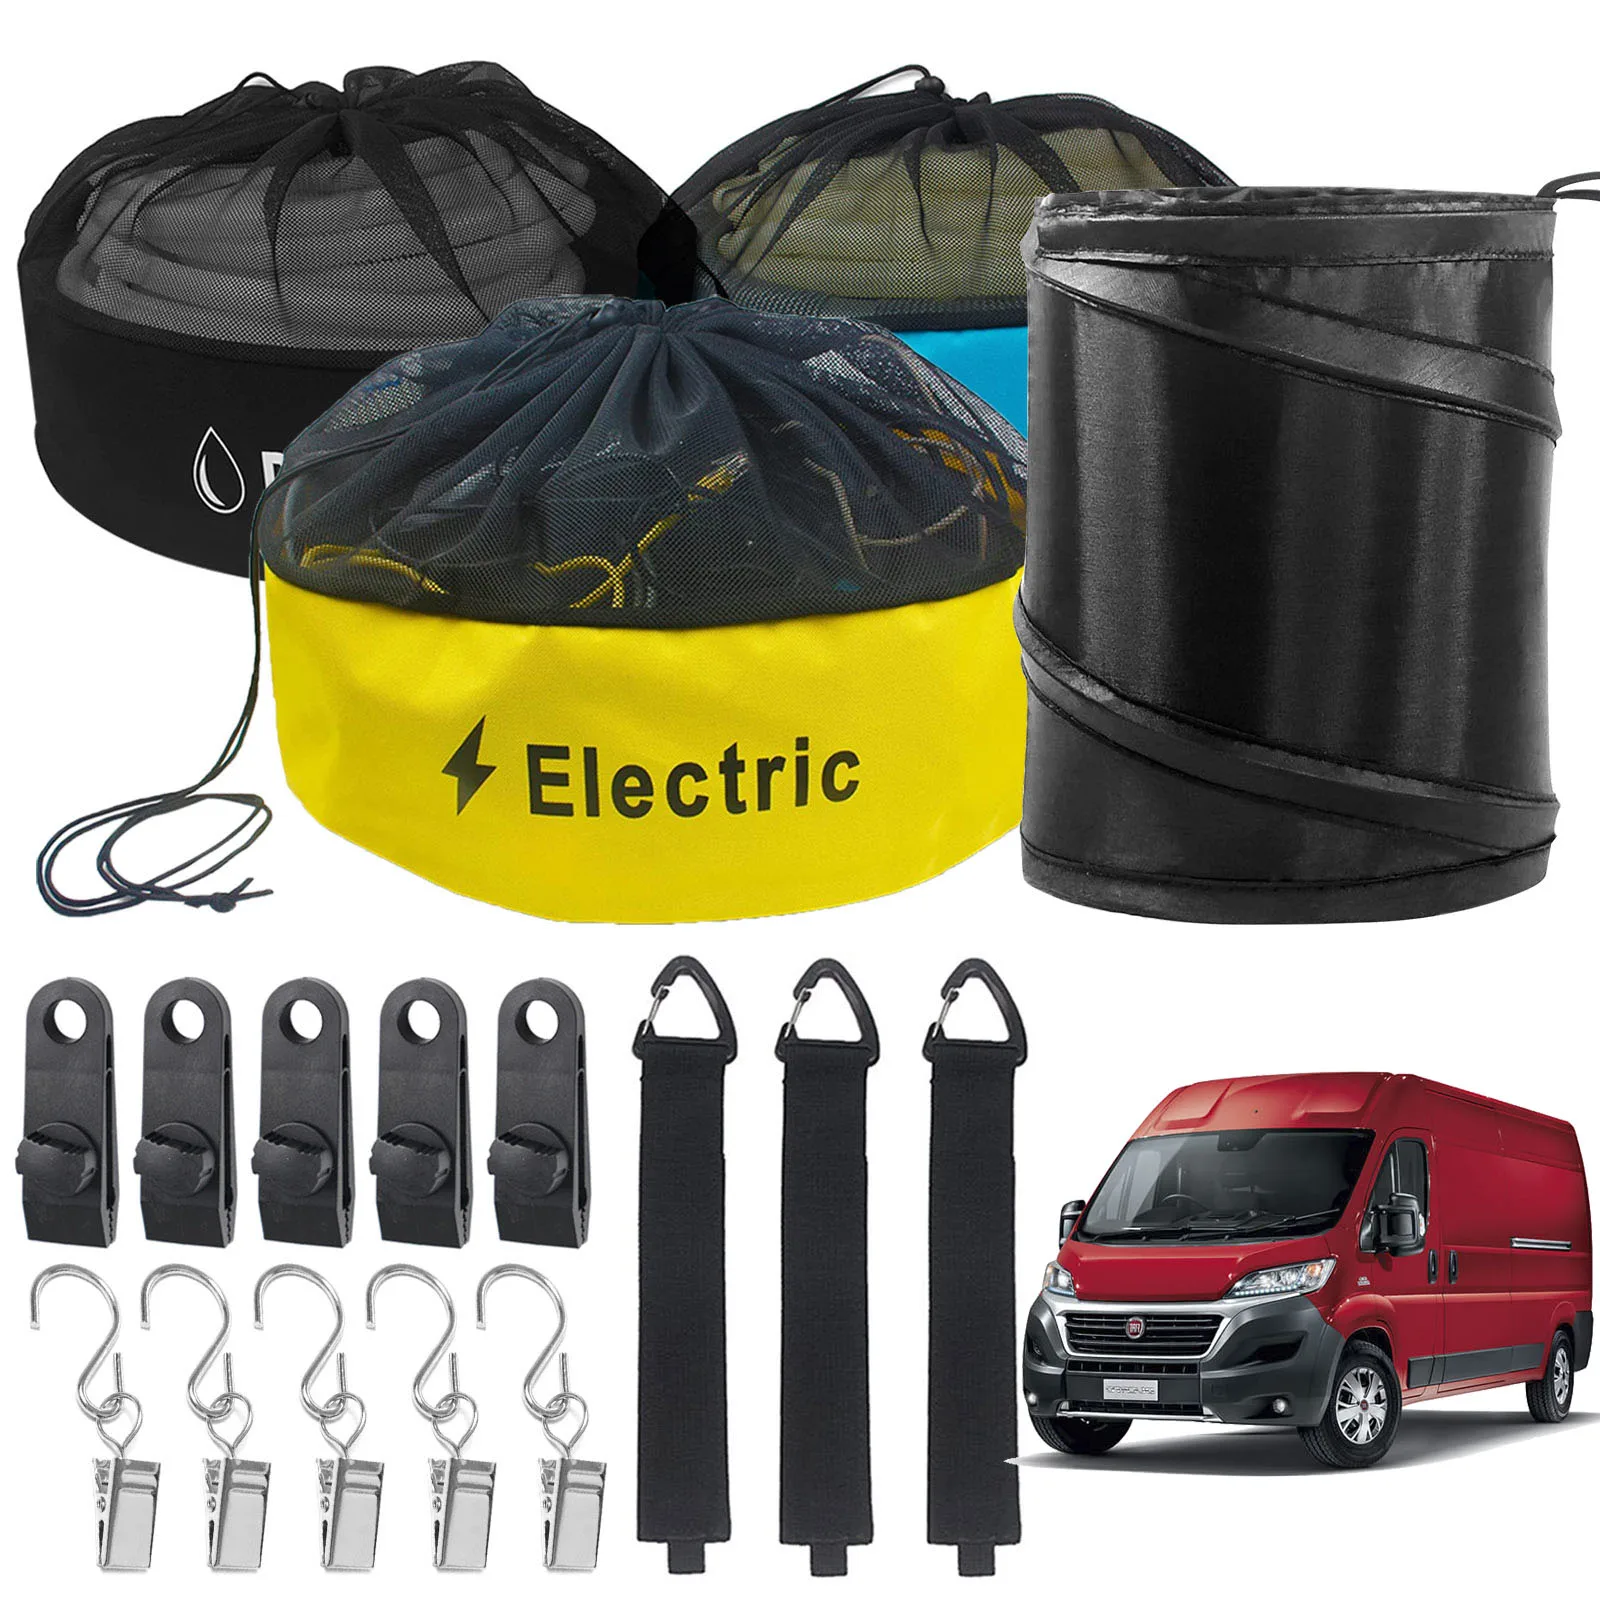 RV Hose Bags for Fiat Ducato 244 250 290 Camper Storage Sewer Fresh/Black Water Electrical Trash Can Motorhome Cleaning Tool Kit диск тормозной задний trialli для fiat ducato ii 06 df 165105